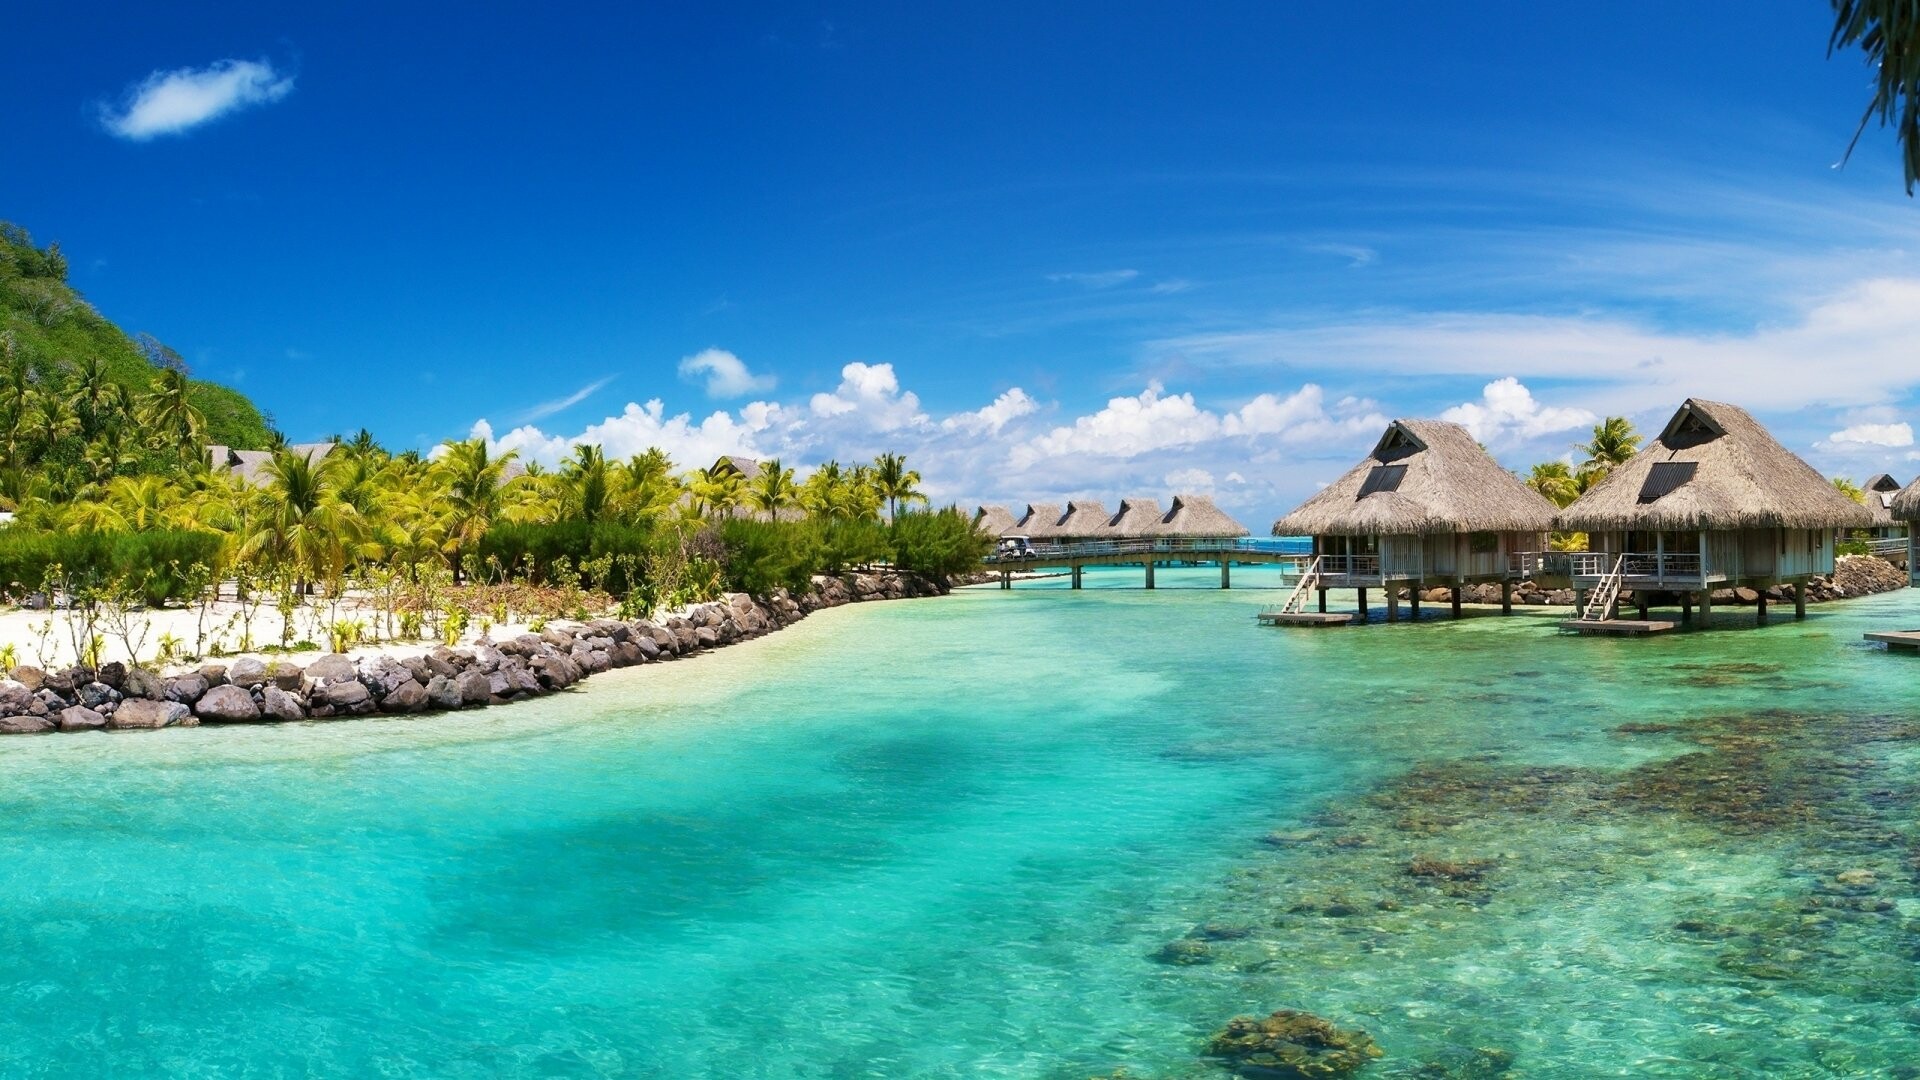 Tahiti: Bora Bora, A small island, set in a turquoise lagoon. 1920x1080 Full HD Background.